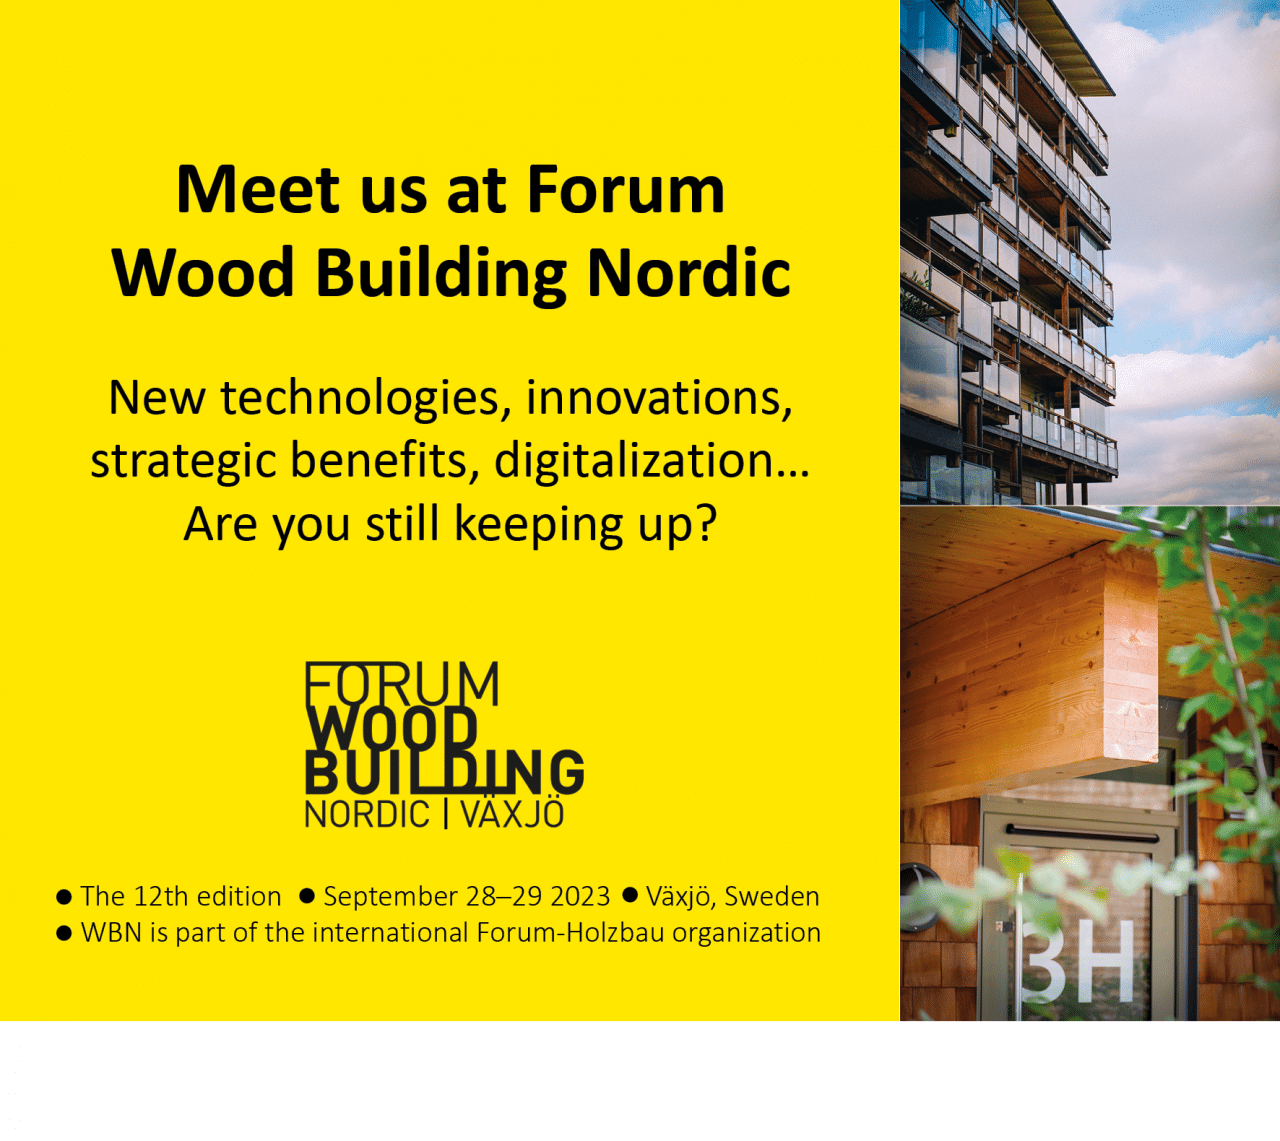 Vibratec-Forum-Wood-Building-Nordic